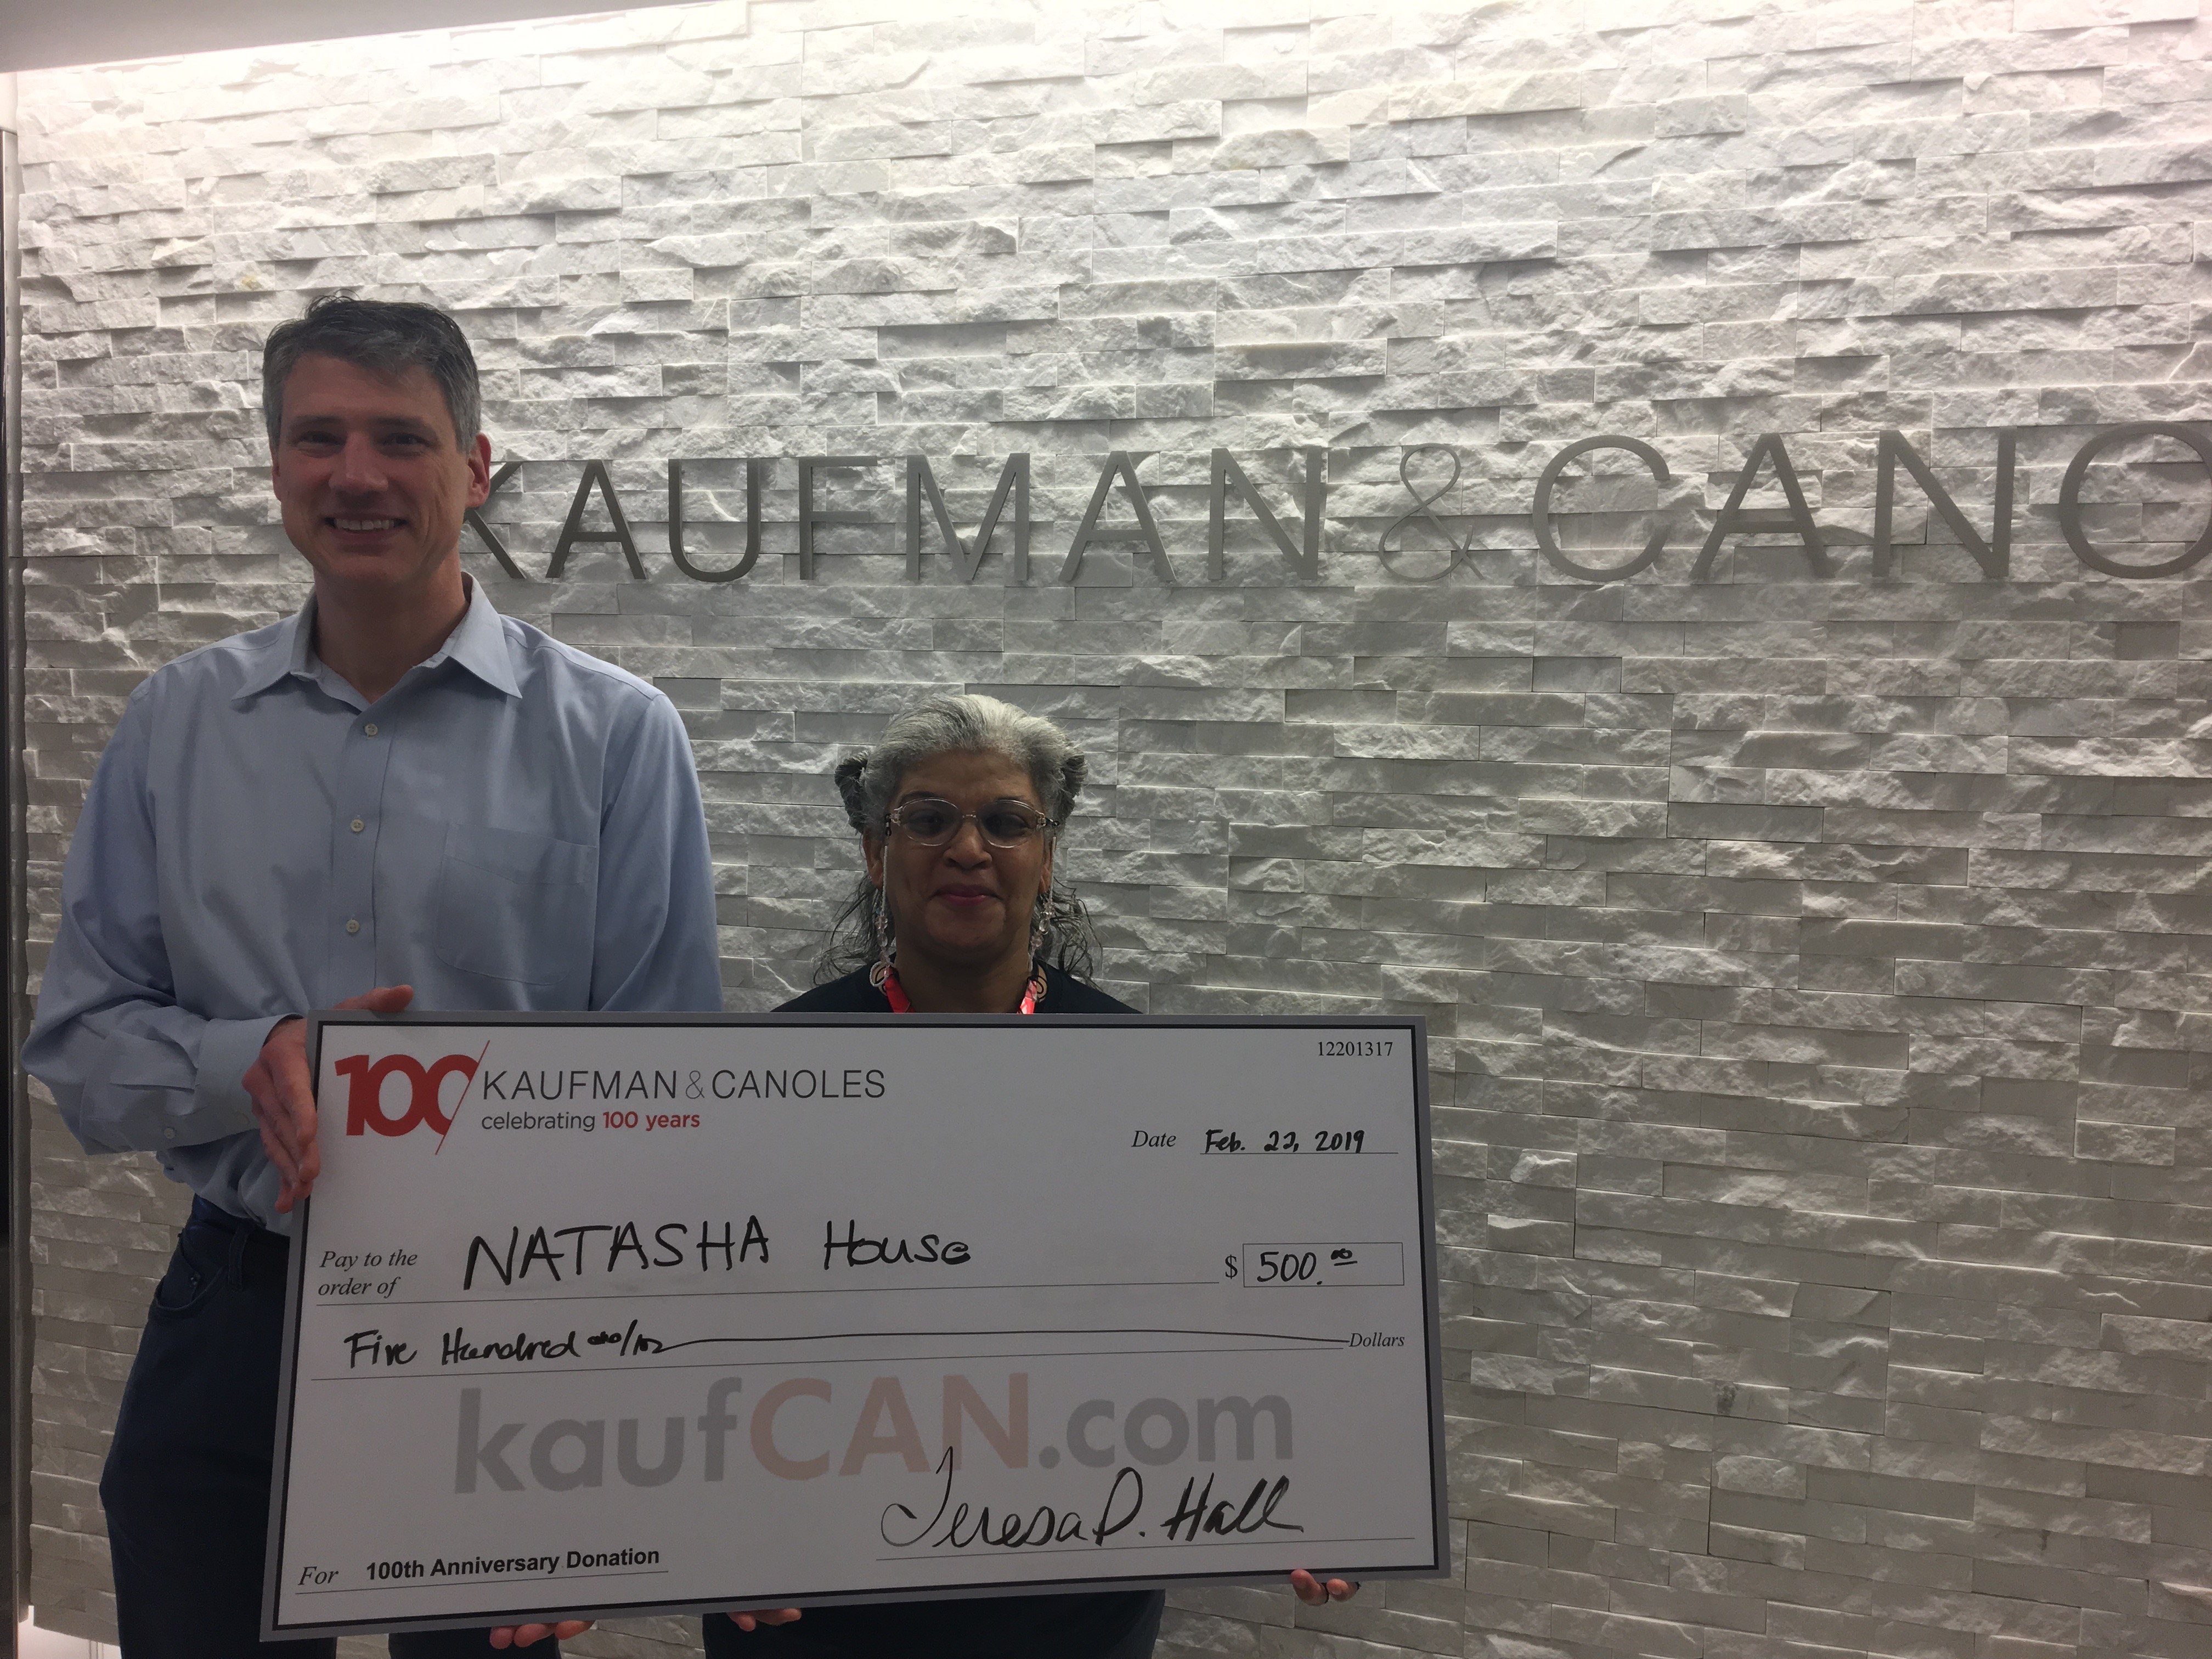 Kaufman & Canoles donates to NATASHA House, Inc.